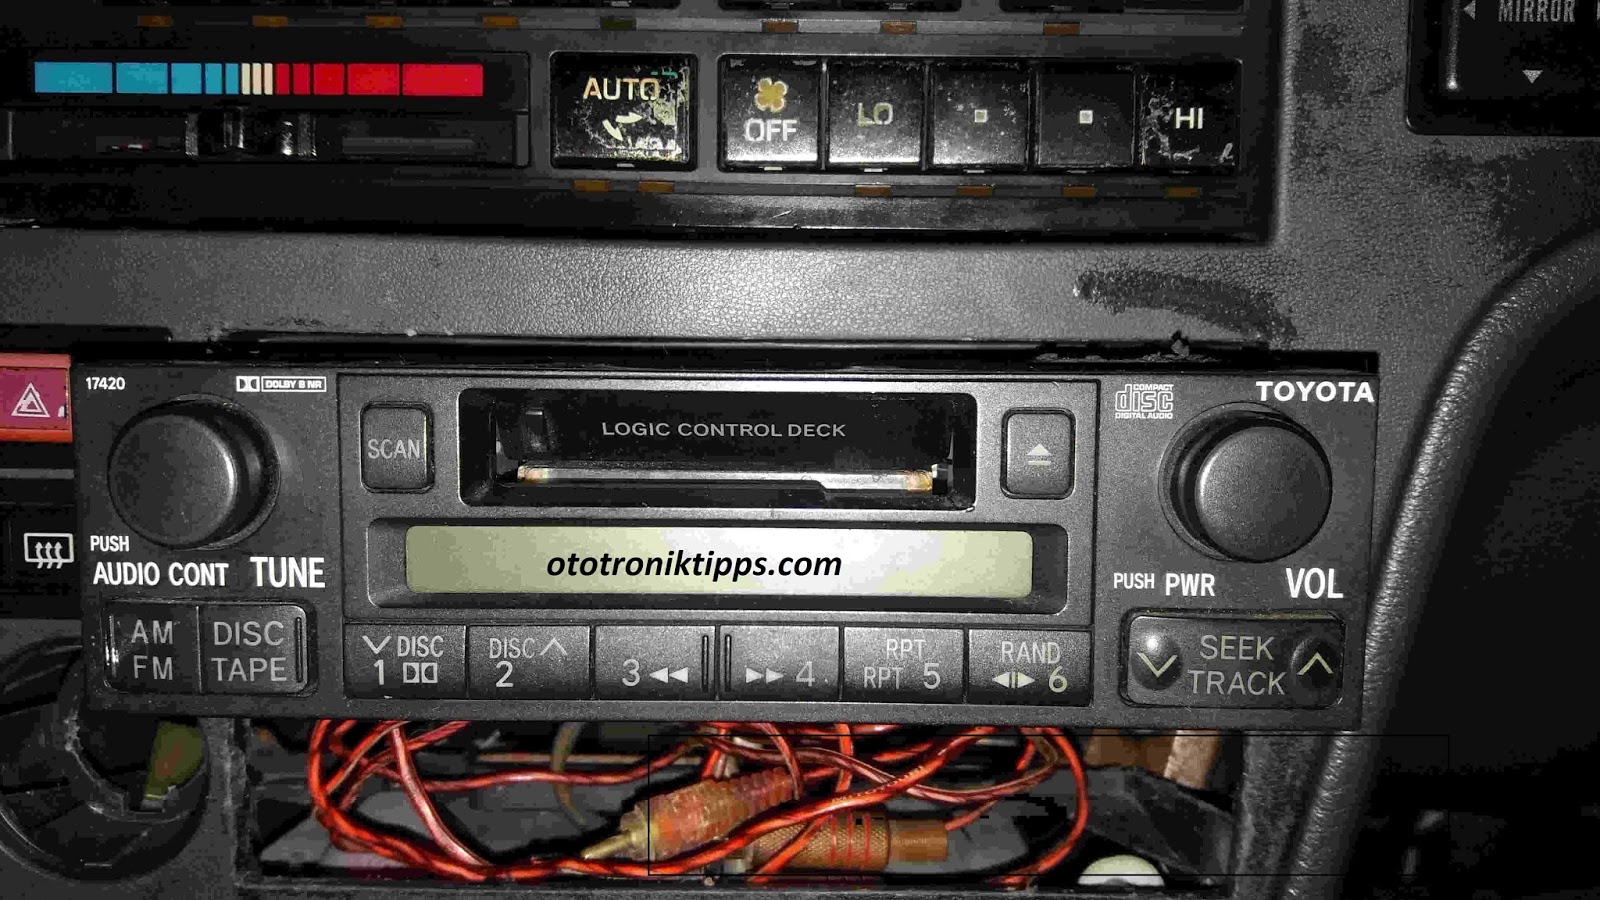 64 Cara Modifikasi Tape Mobil Avanza Pakai Usb Terbaru Fire Modif